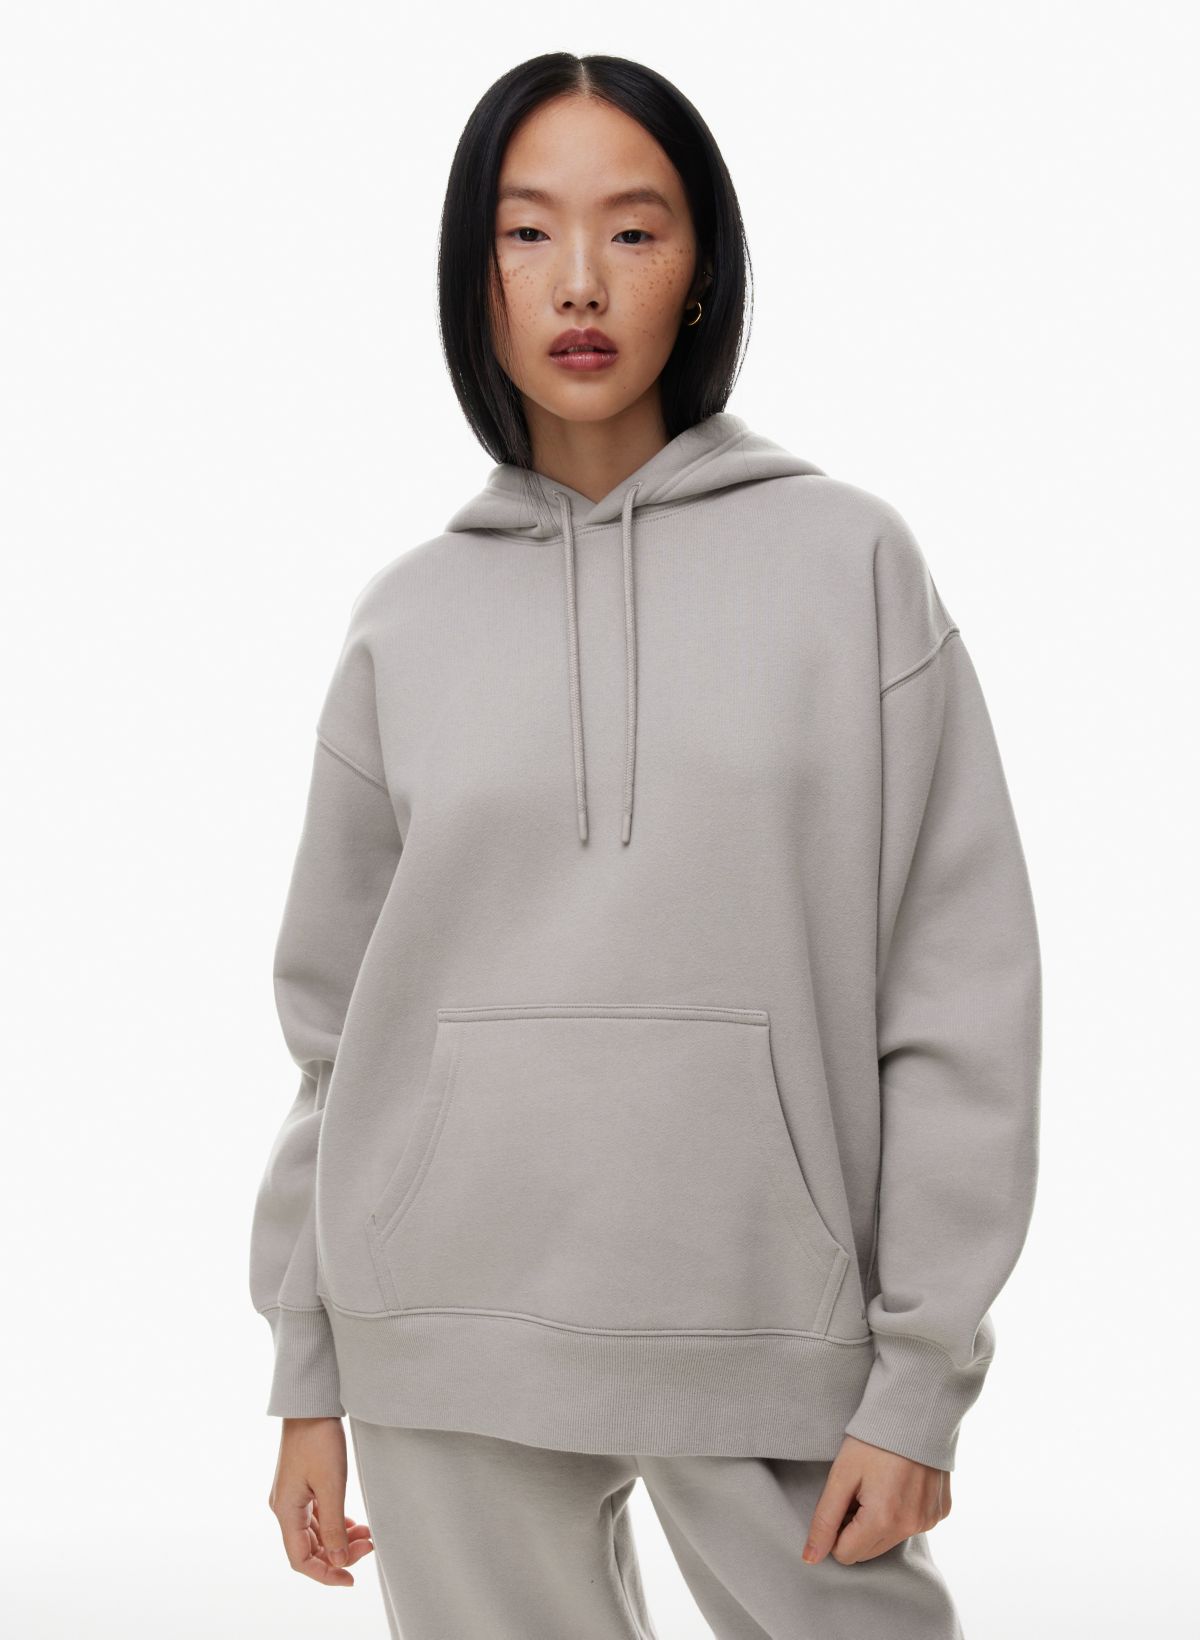 Adidas Women Sleeveless Pullover Hoodie (gray / medium grey heather)